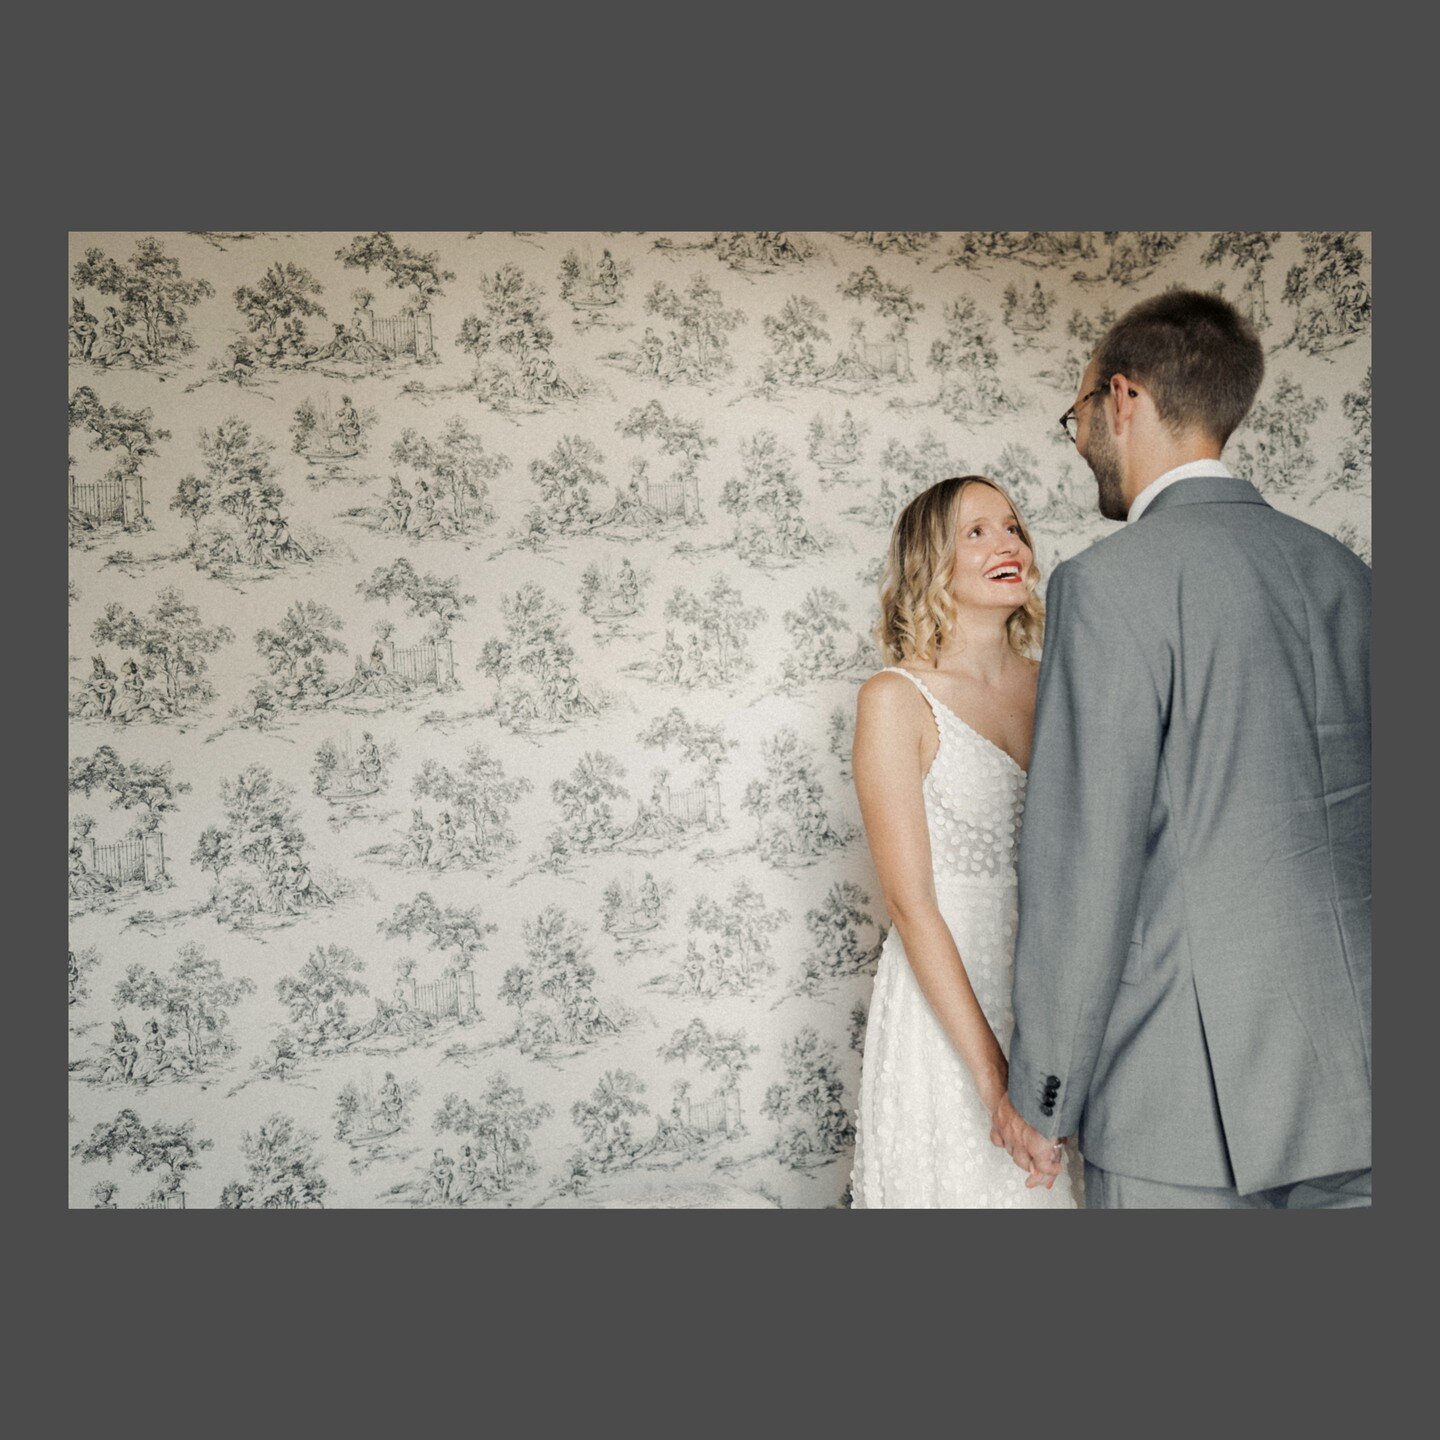 📸 Tag 363 des #Fotografie -Projekts &bdquo;365Augenblicke&ldquo; | Was denkst Du? #365augenblicke #menschen #momente #fotoreportage #businessfotografie #hochzeit #weddingphotography #happyness @villahasenholz